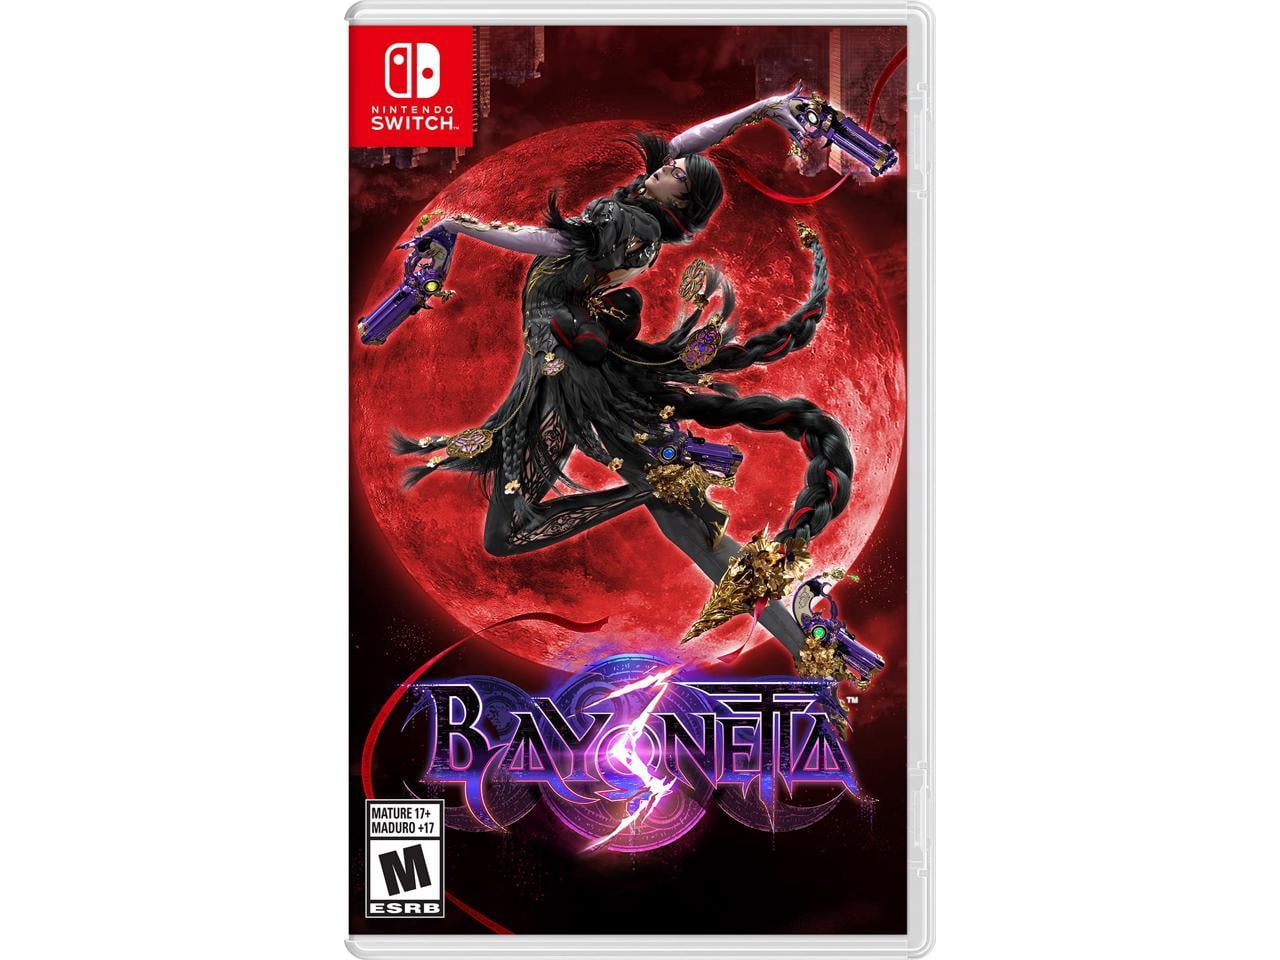 Bayonetta 3 – Nintendo Direct 9.13.22 – Nintendo Switch 